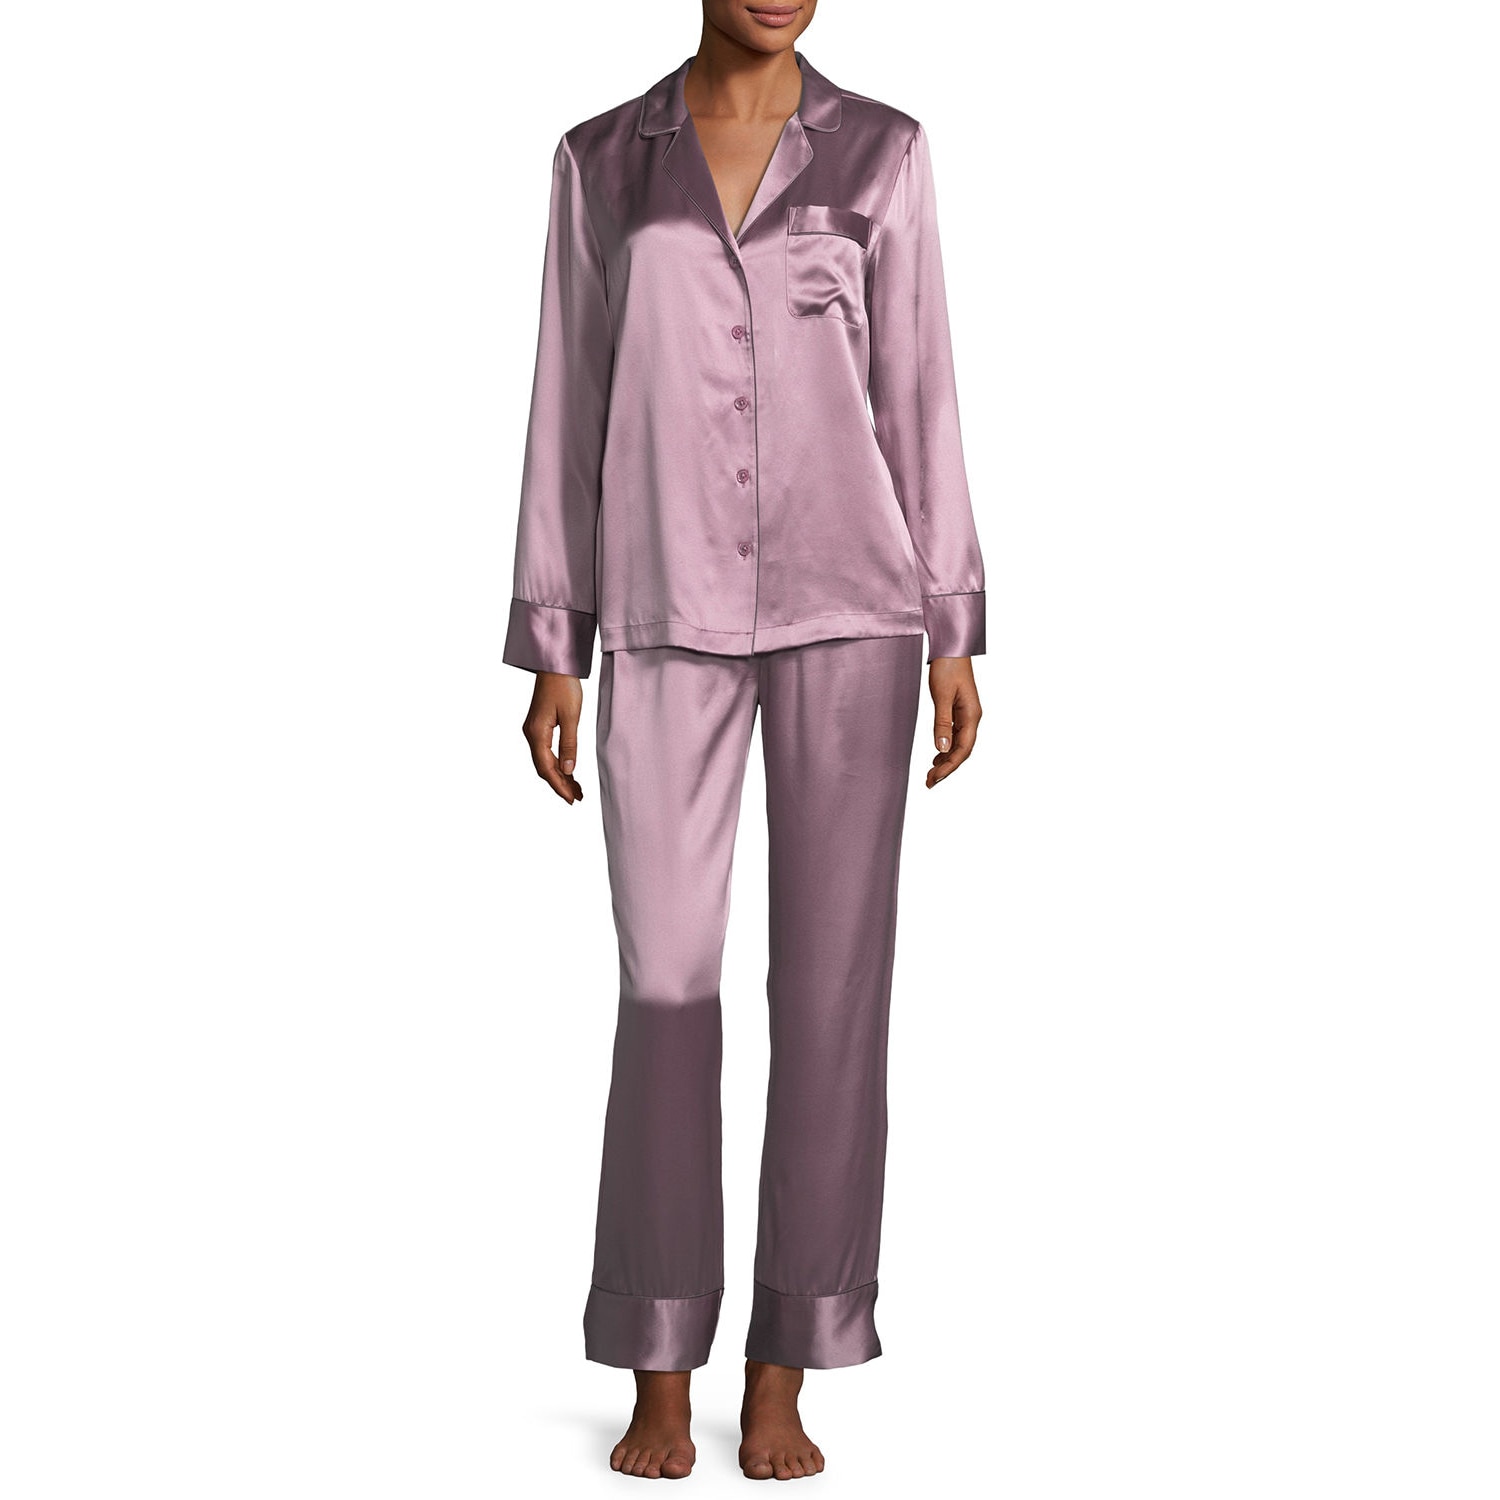 Stylish Pajamas for Women: Fashionable PJs | Style & Living